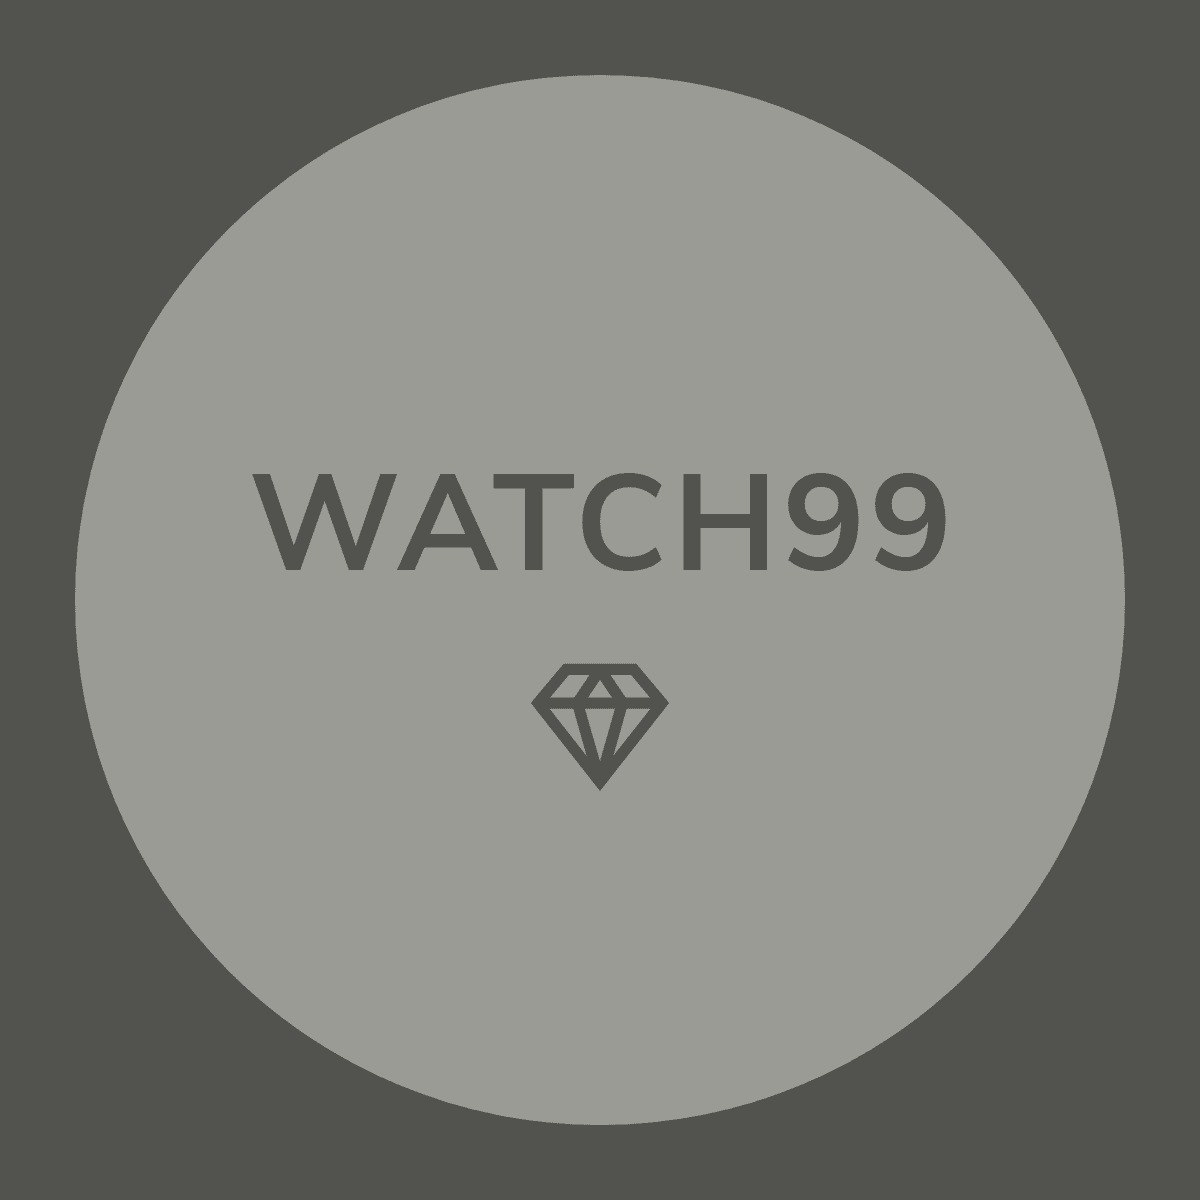 Watch99